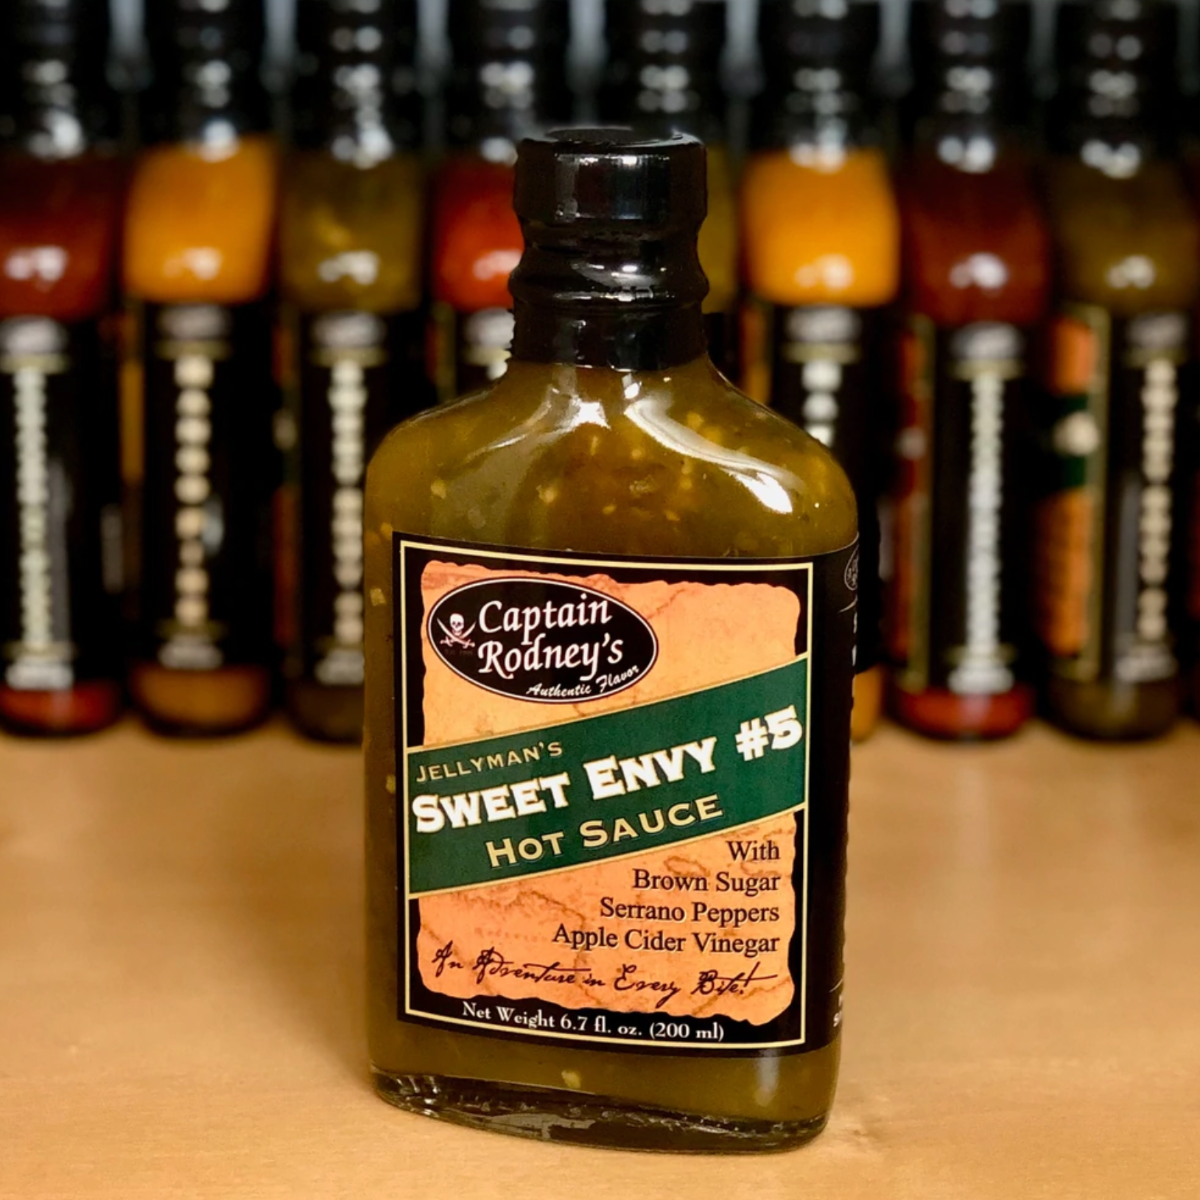 Captain Rodney's Private Reserve Sweet Envy #5 Hot Sauce